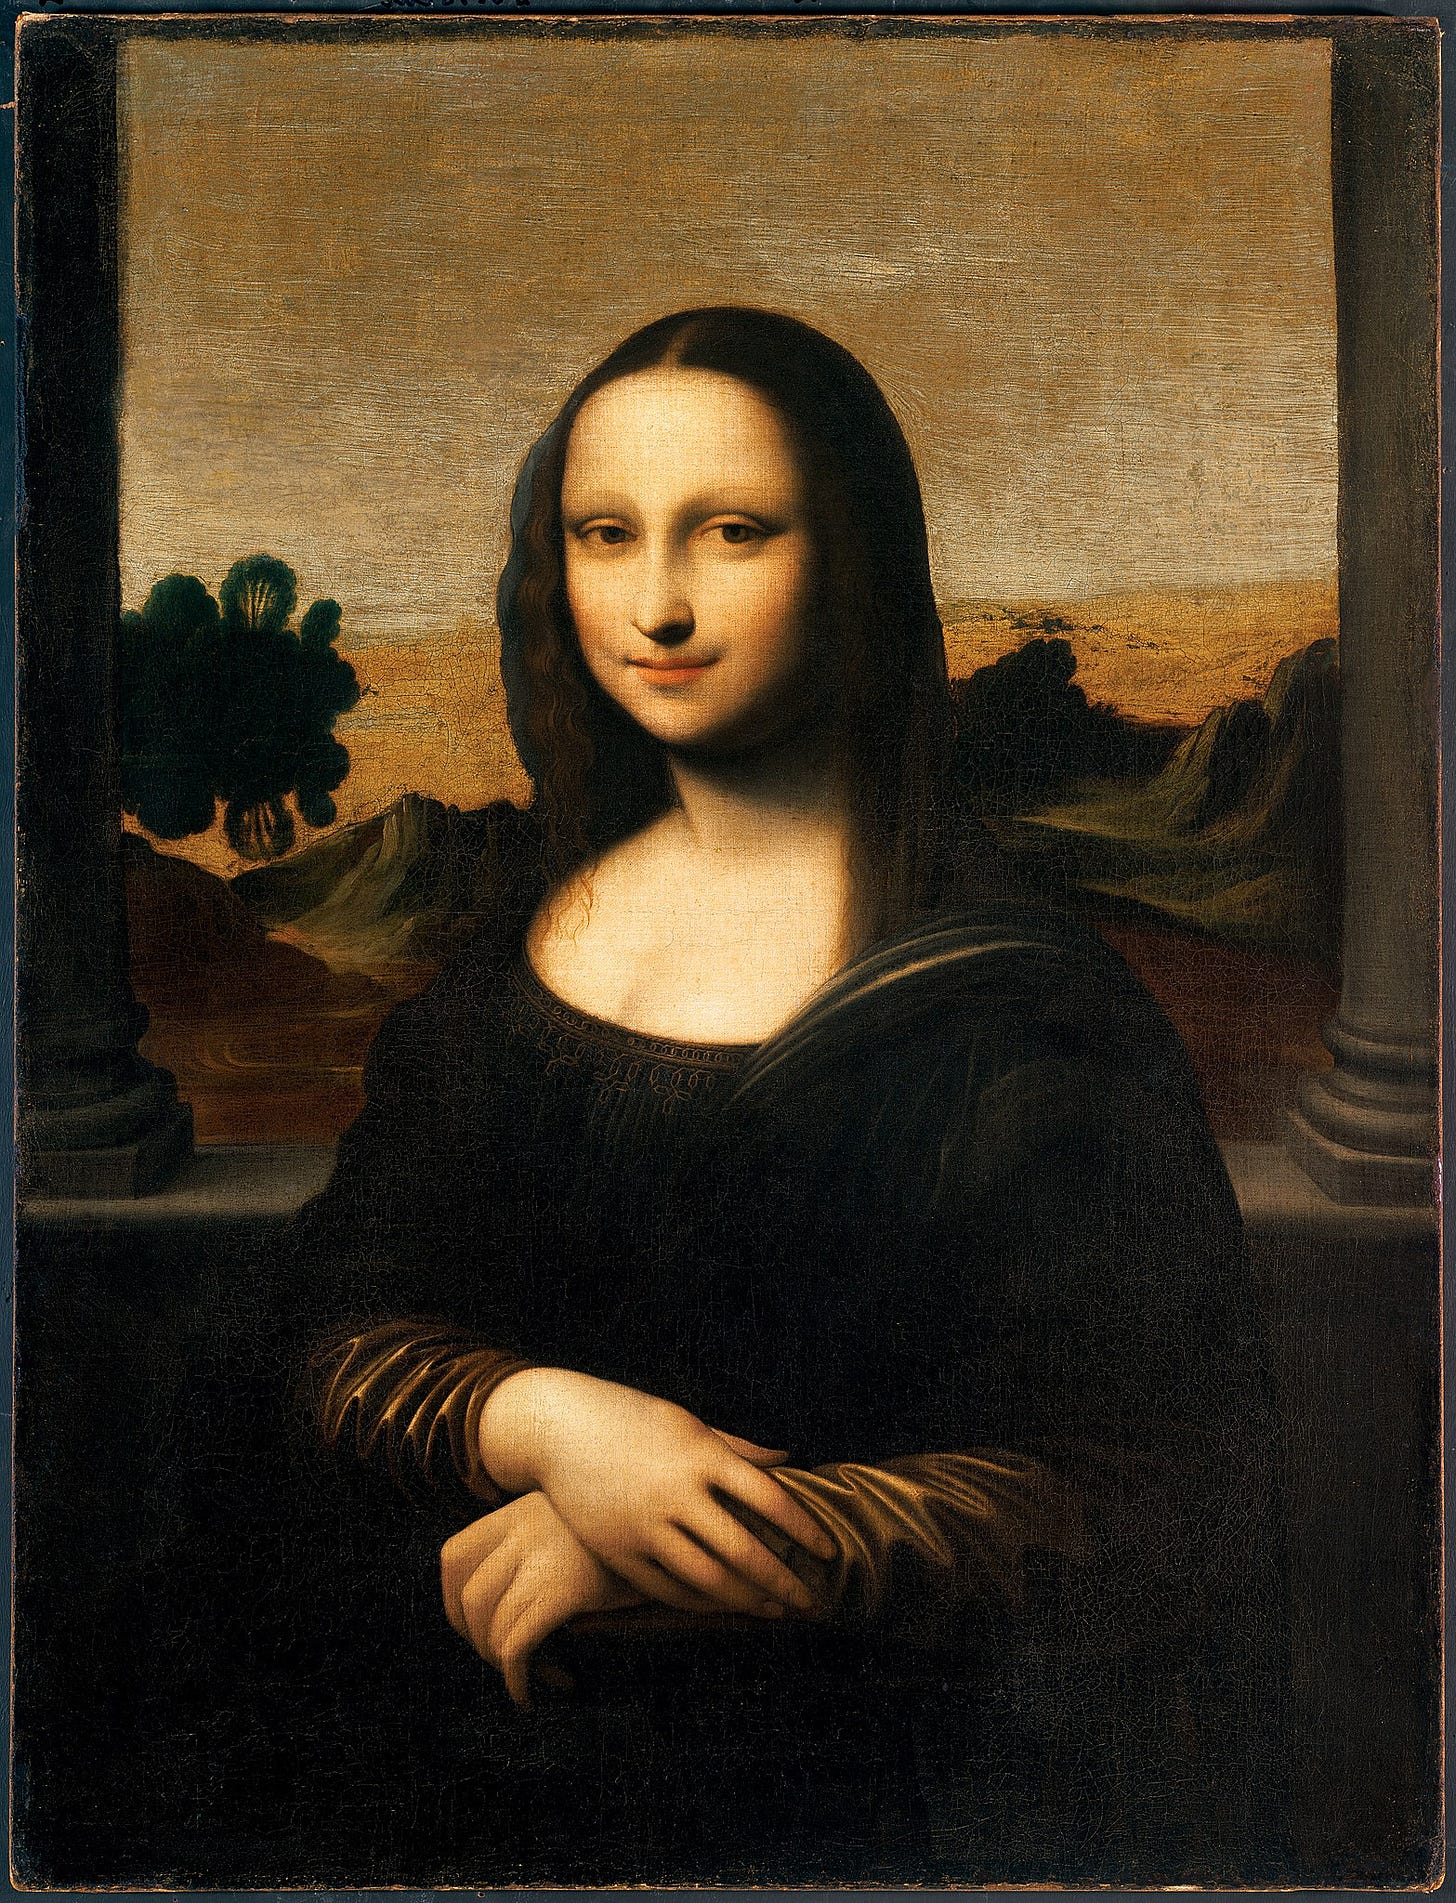 The Second Mona Lisa